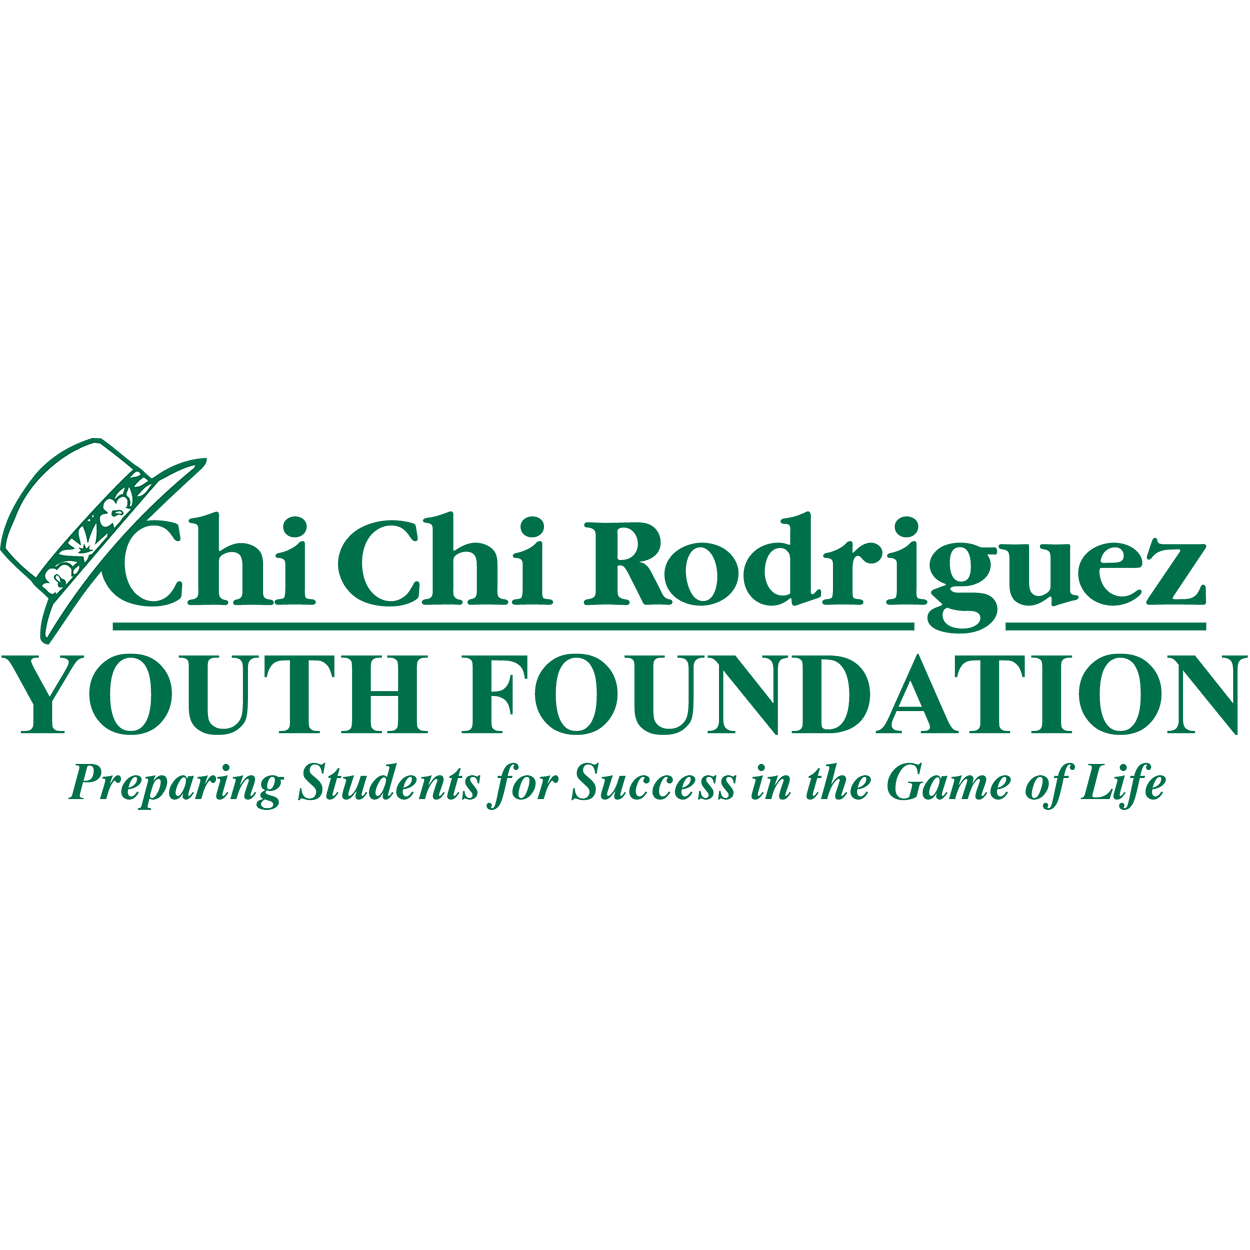 Chi Chi Rodriguez Youth Foundation